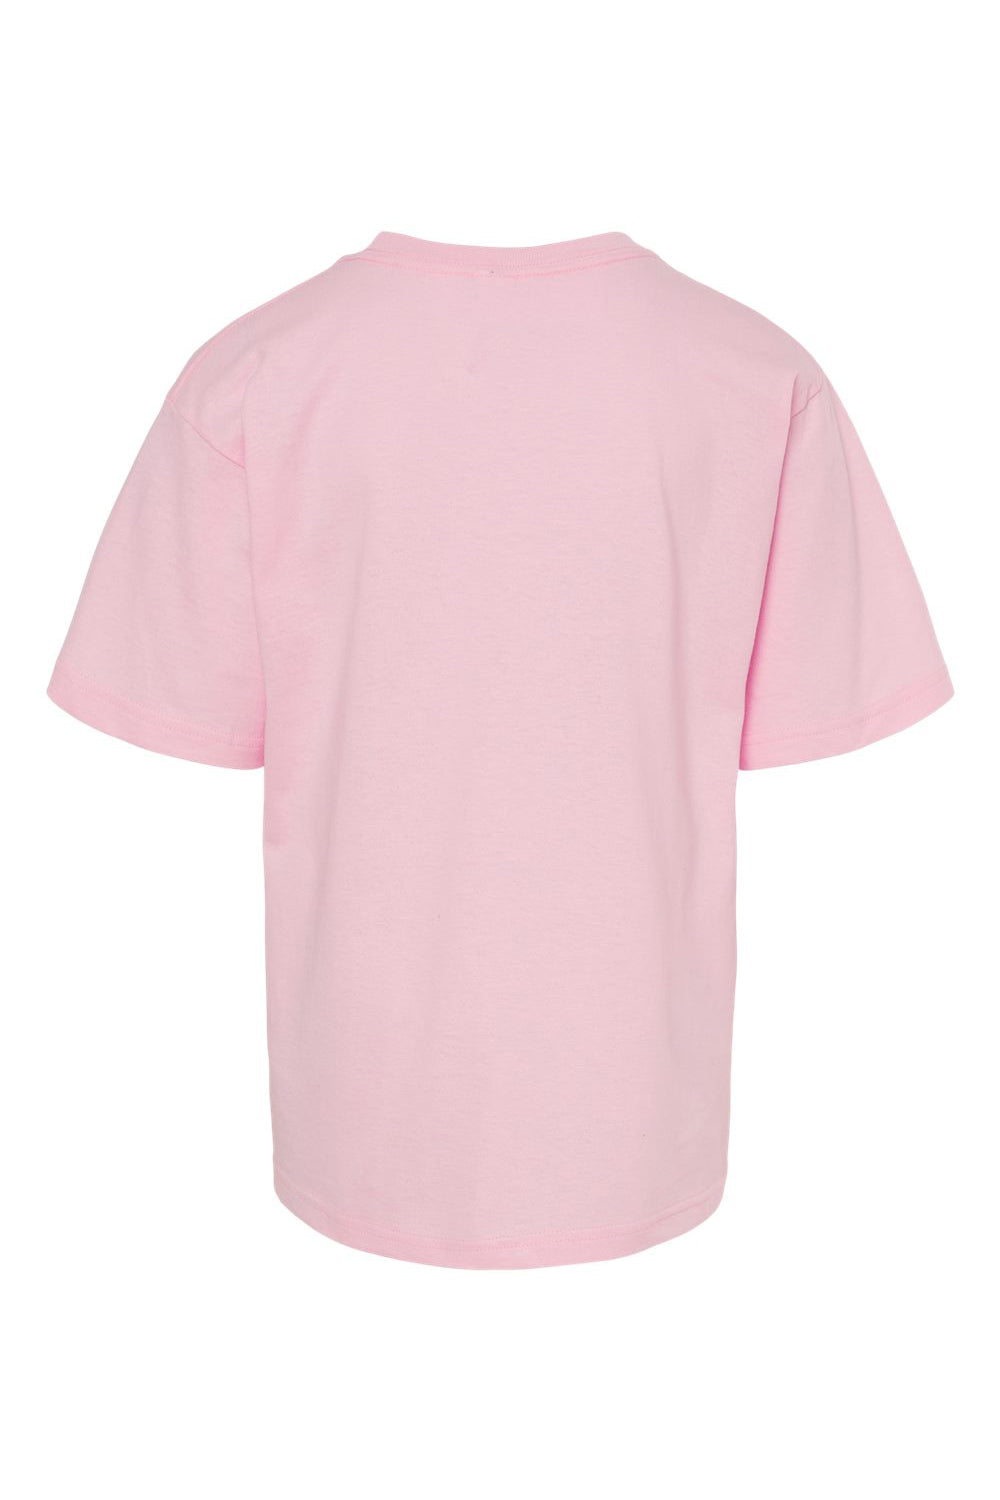 M&O 4850 Youth Gold Soft Touch Short Sleeve Crewneck T-Shirt Light Pink Flat Back